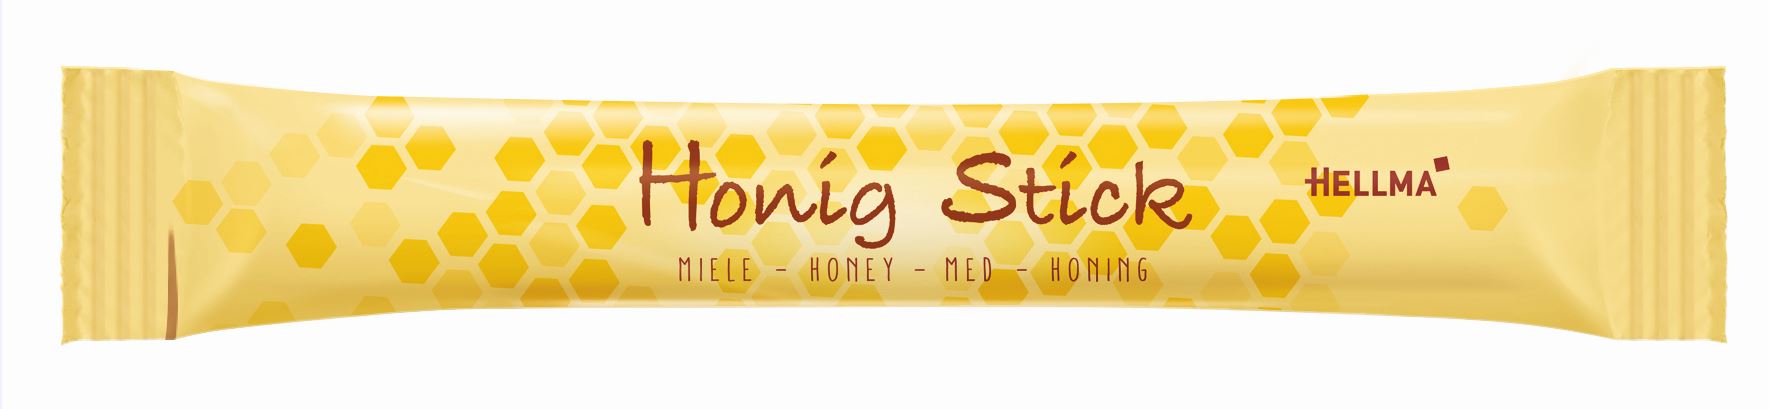 Hellma Honig-Sticks à 8 g Inhalt: 100 Stk. im Displaykarton